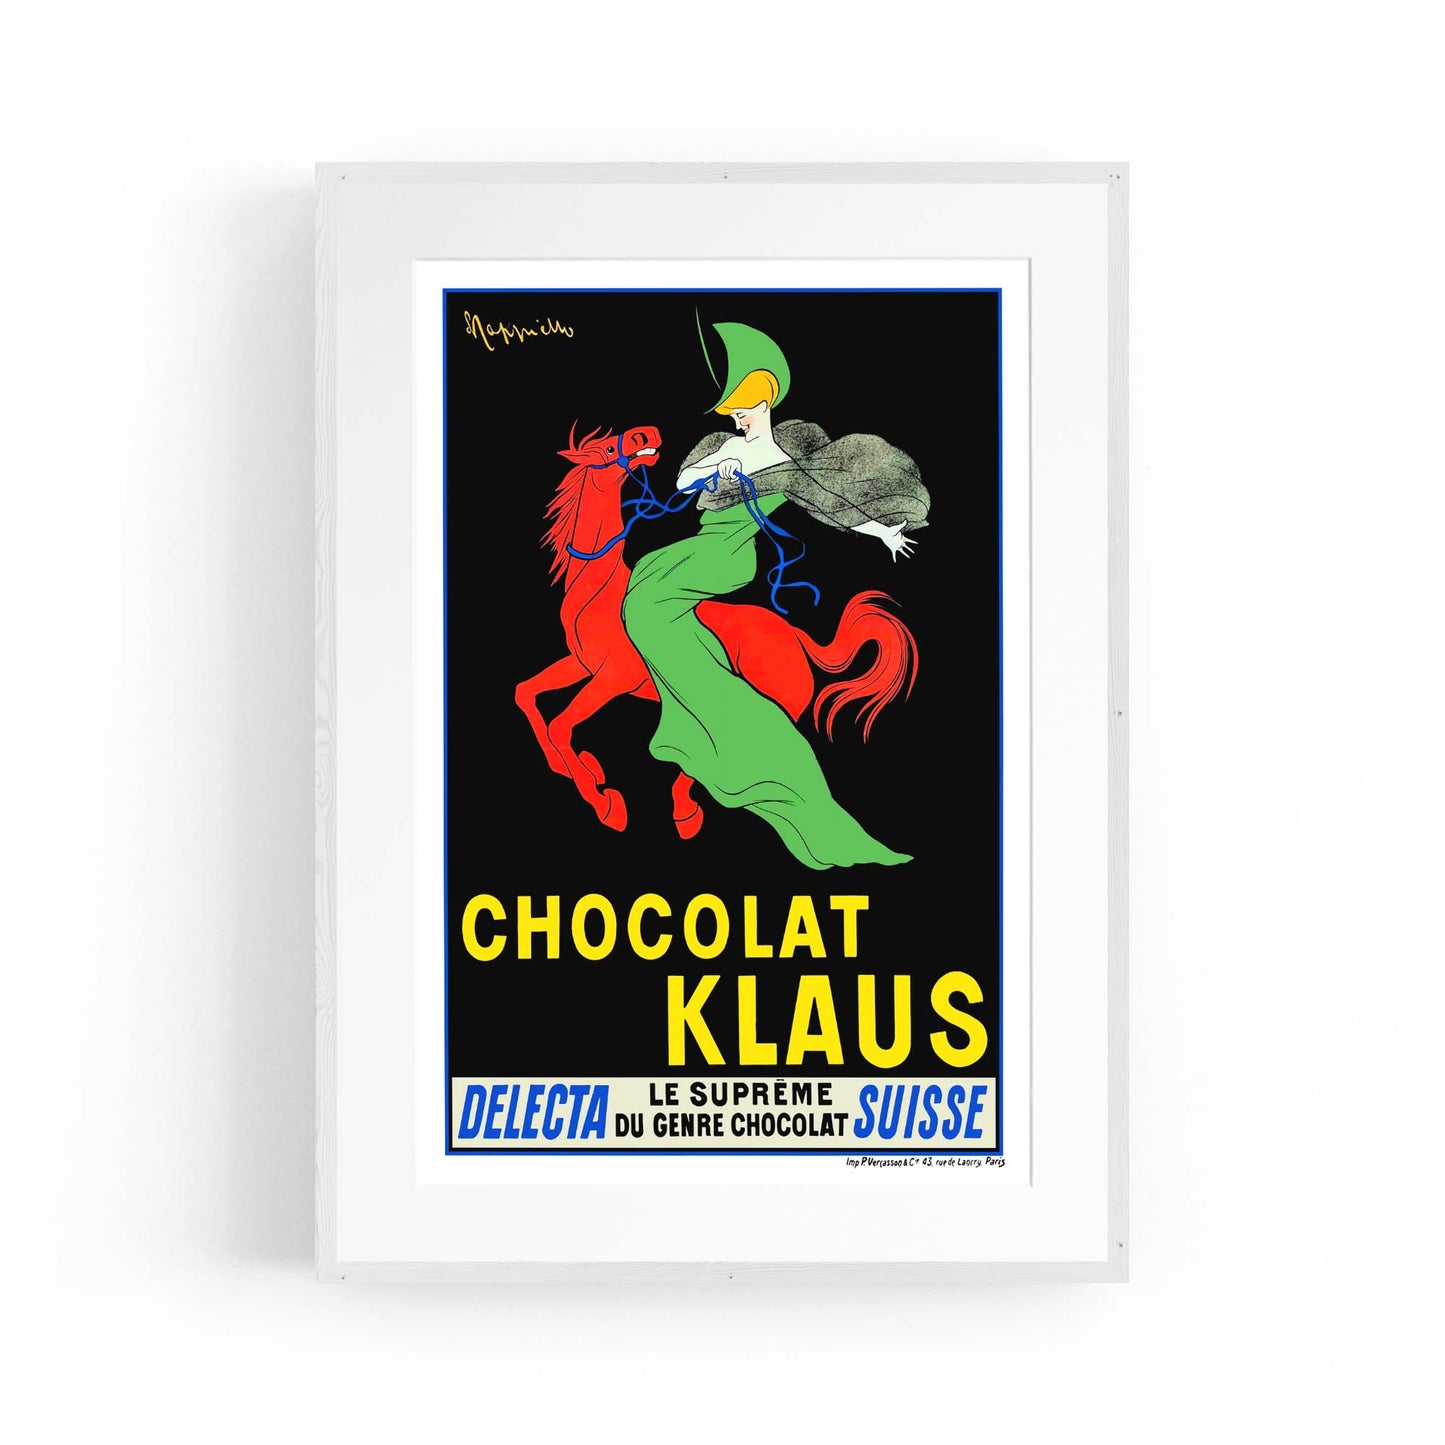 Chocolate Klaus Vintage Food Advert Wall Art - The Affordable Art Company